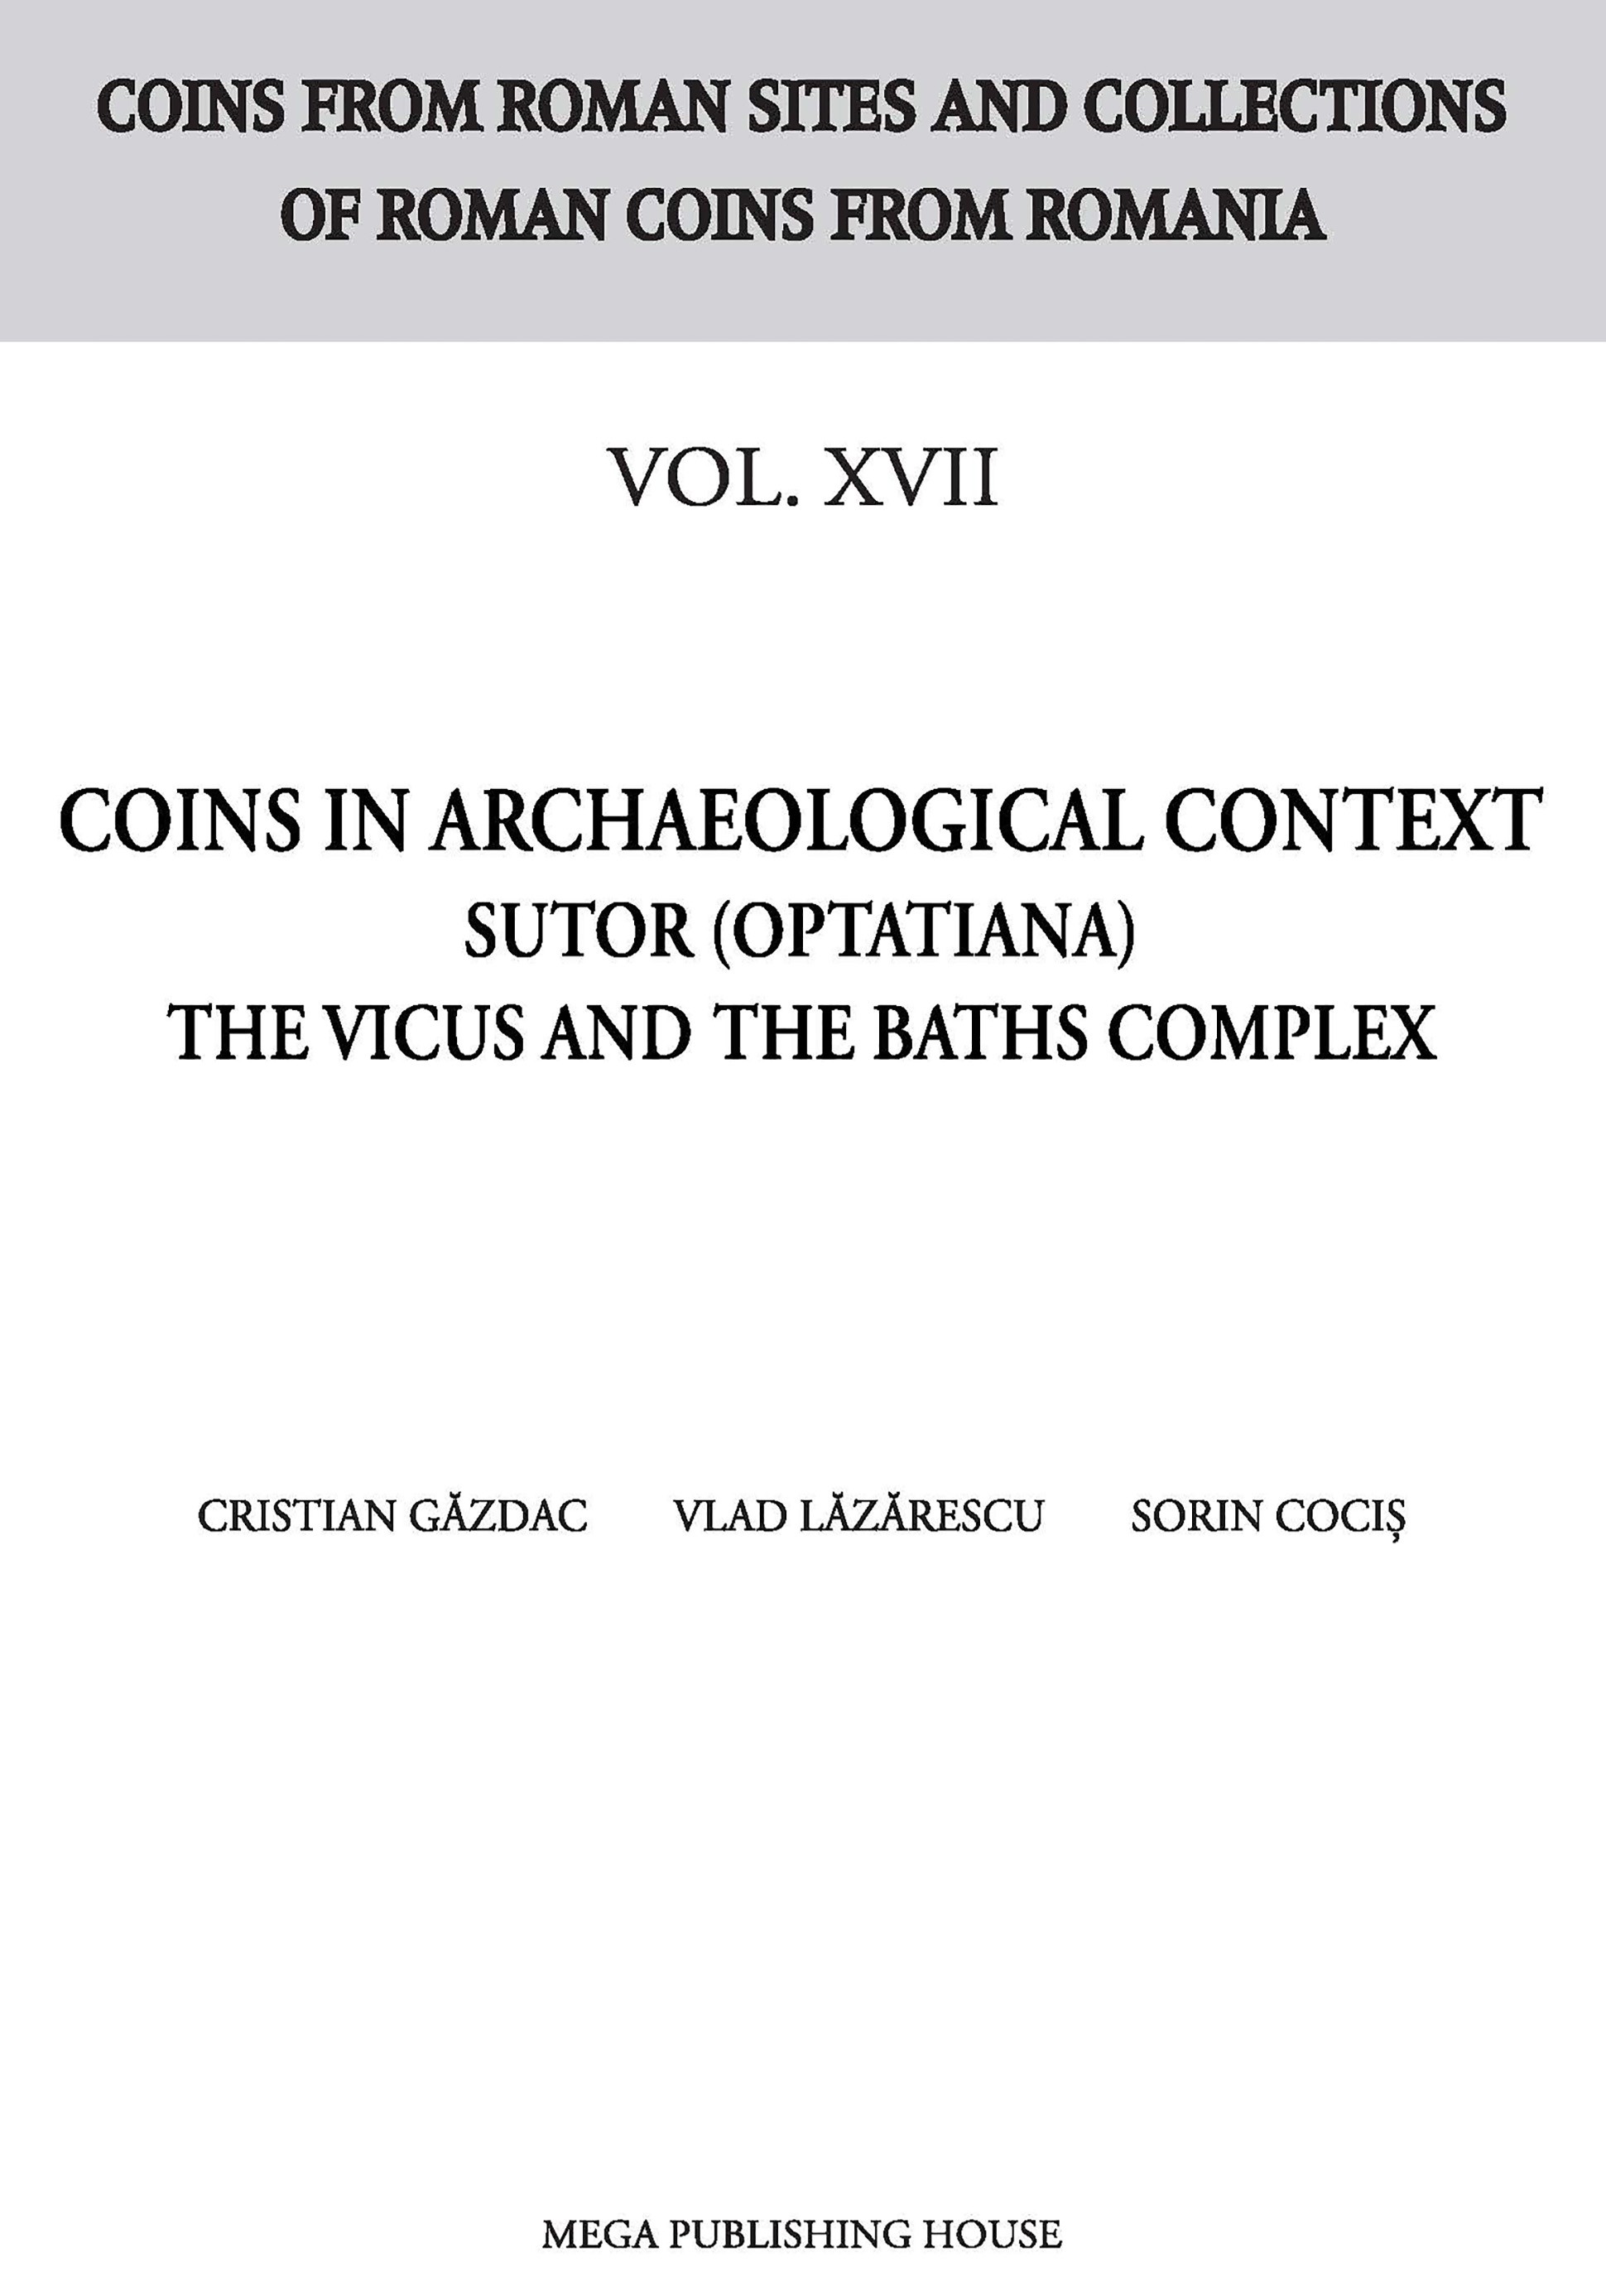 Găzdac, Cristian – Vlad Lăzărescu – Sorin Cociş : Coins in archaeological context. Sutor (Optatiana): The vicus and the baths complex